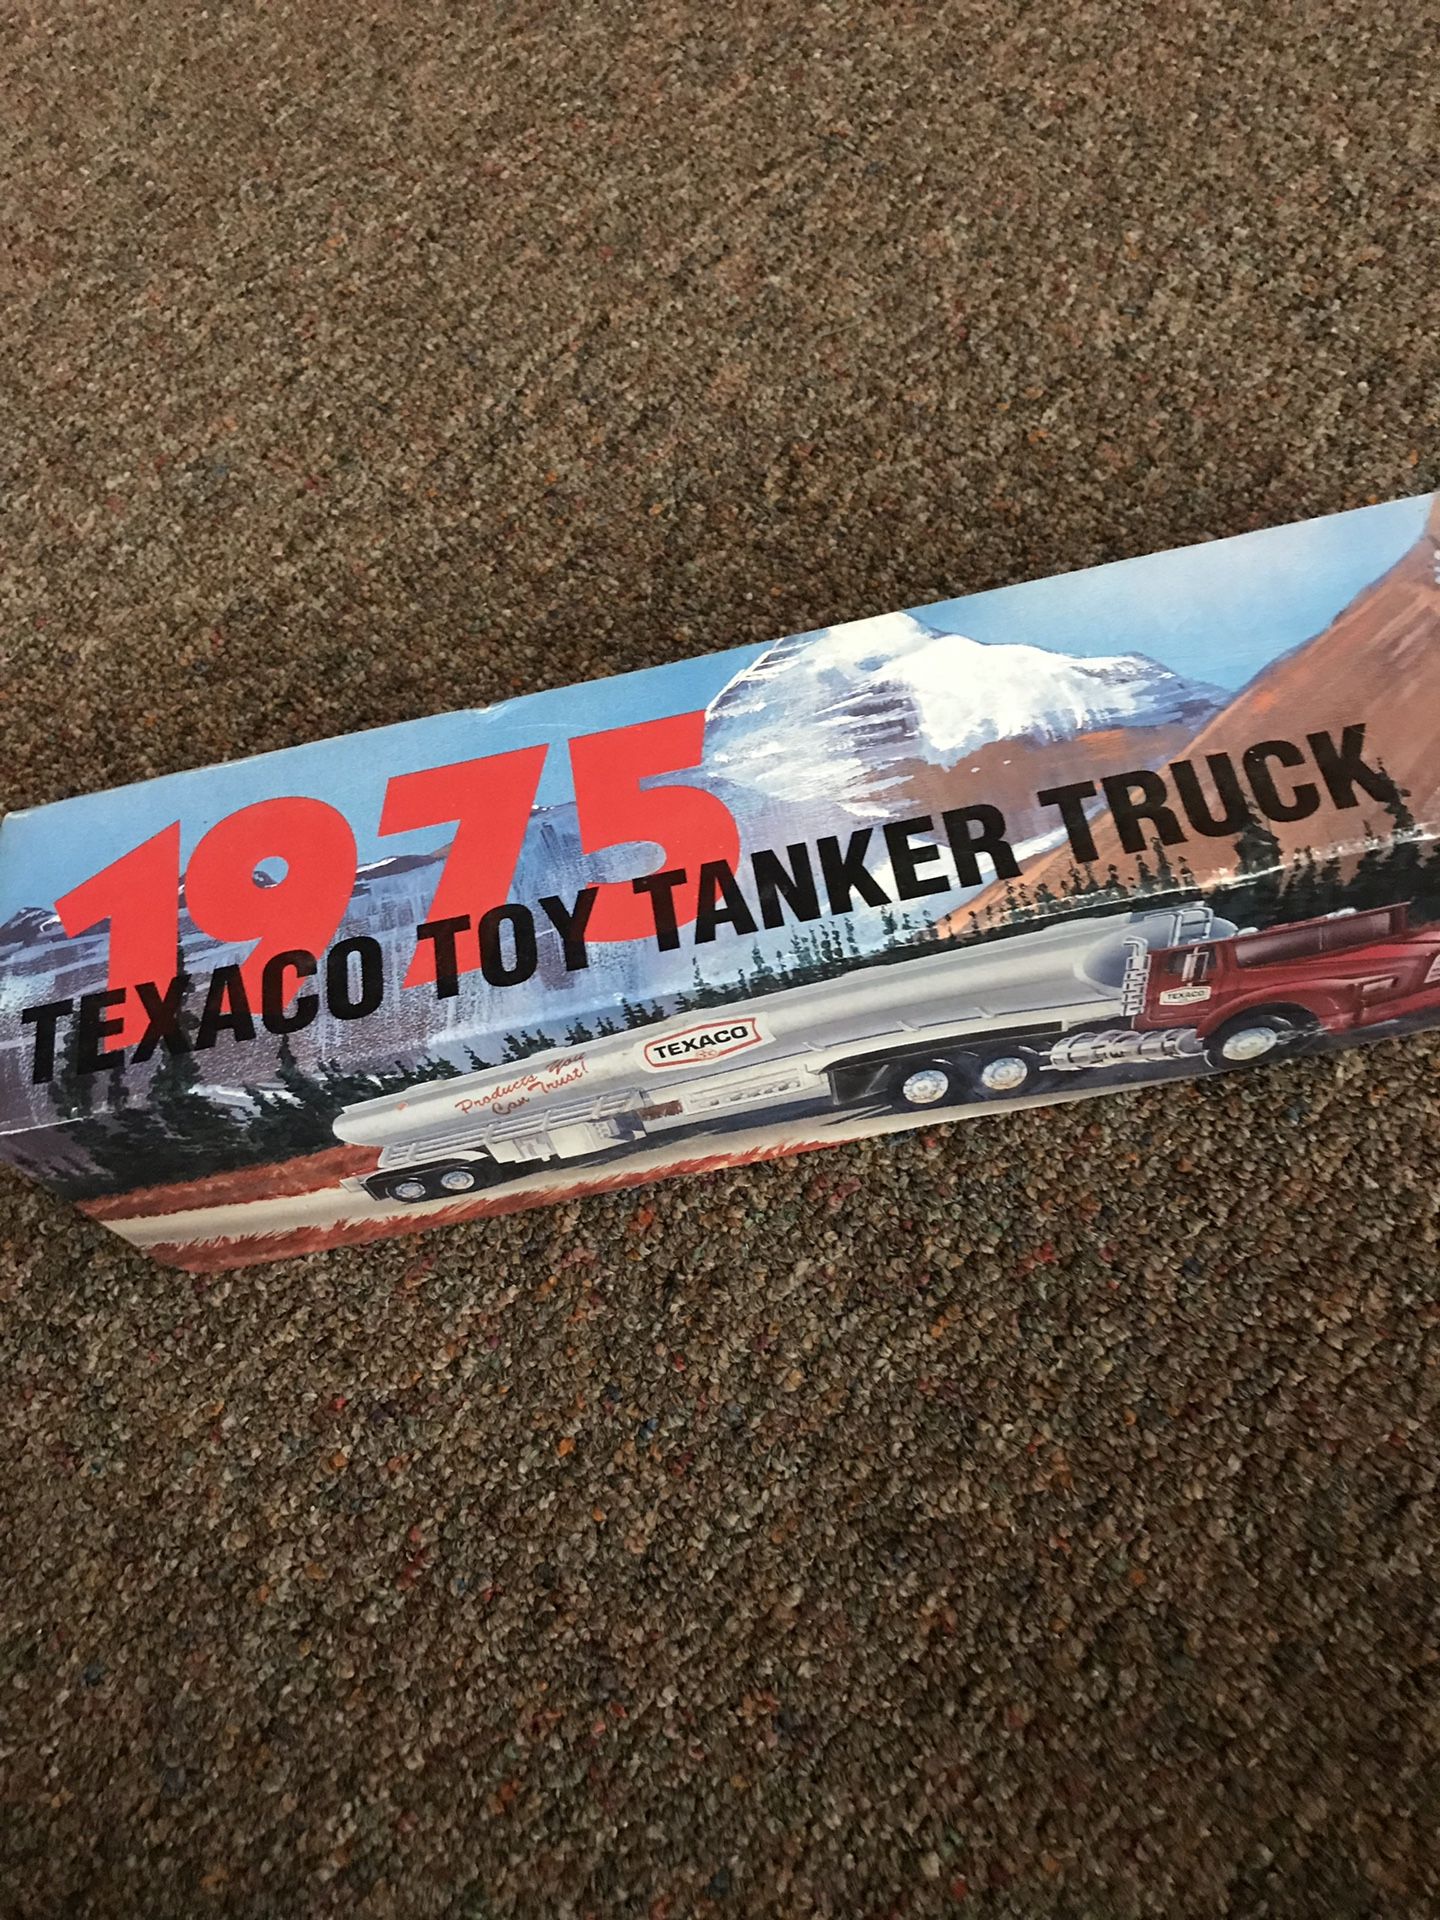 Texaco Toy Tanker Trunk